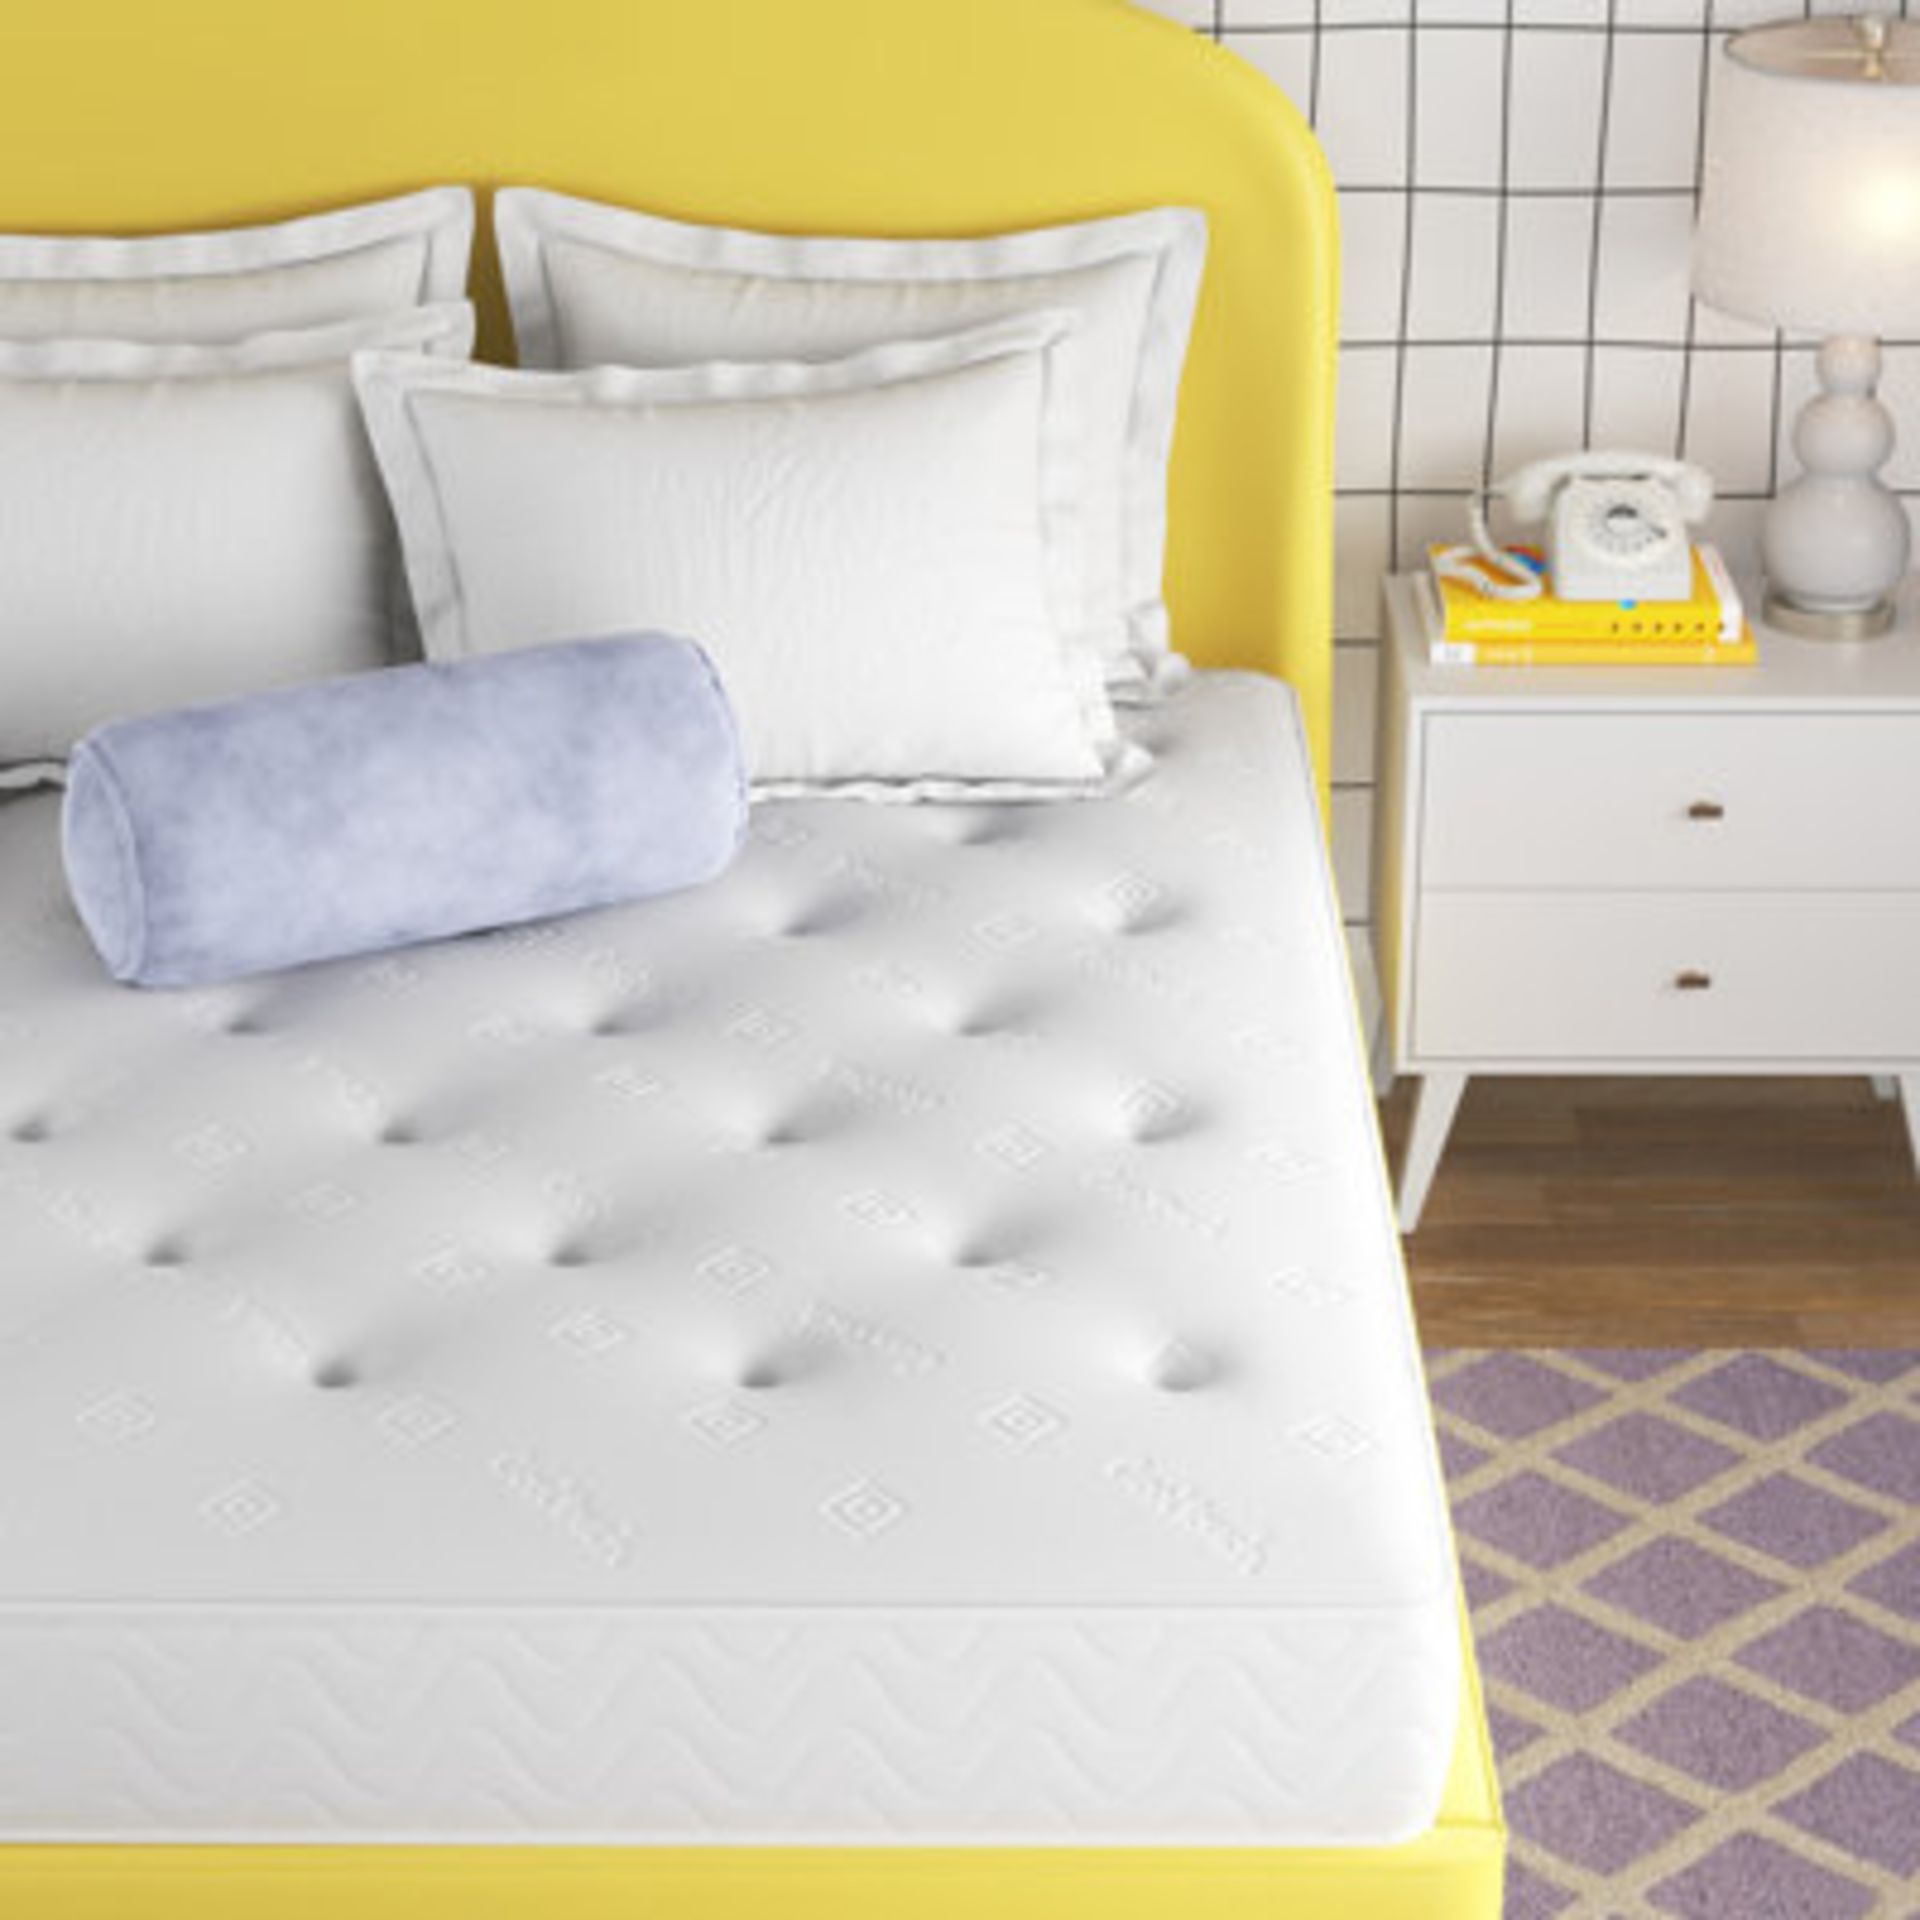 Wayfair Sleep Air Conditioned Pocket Sprung 1000 Mattress. Double.,This mattress is hand-crafted